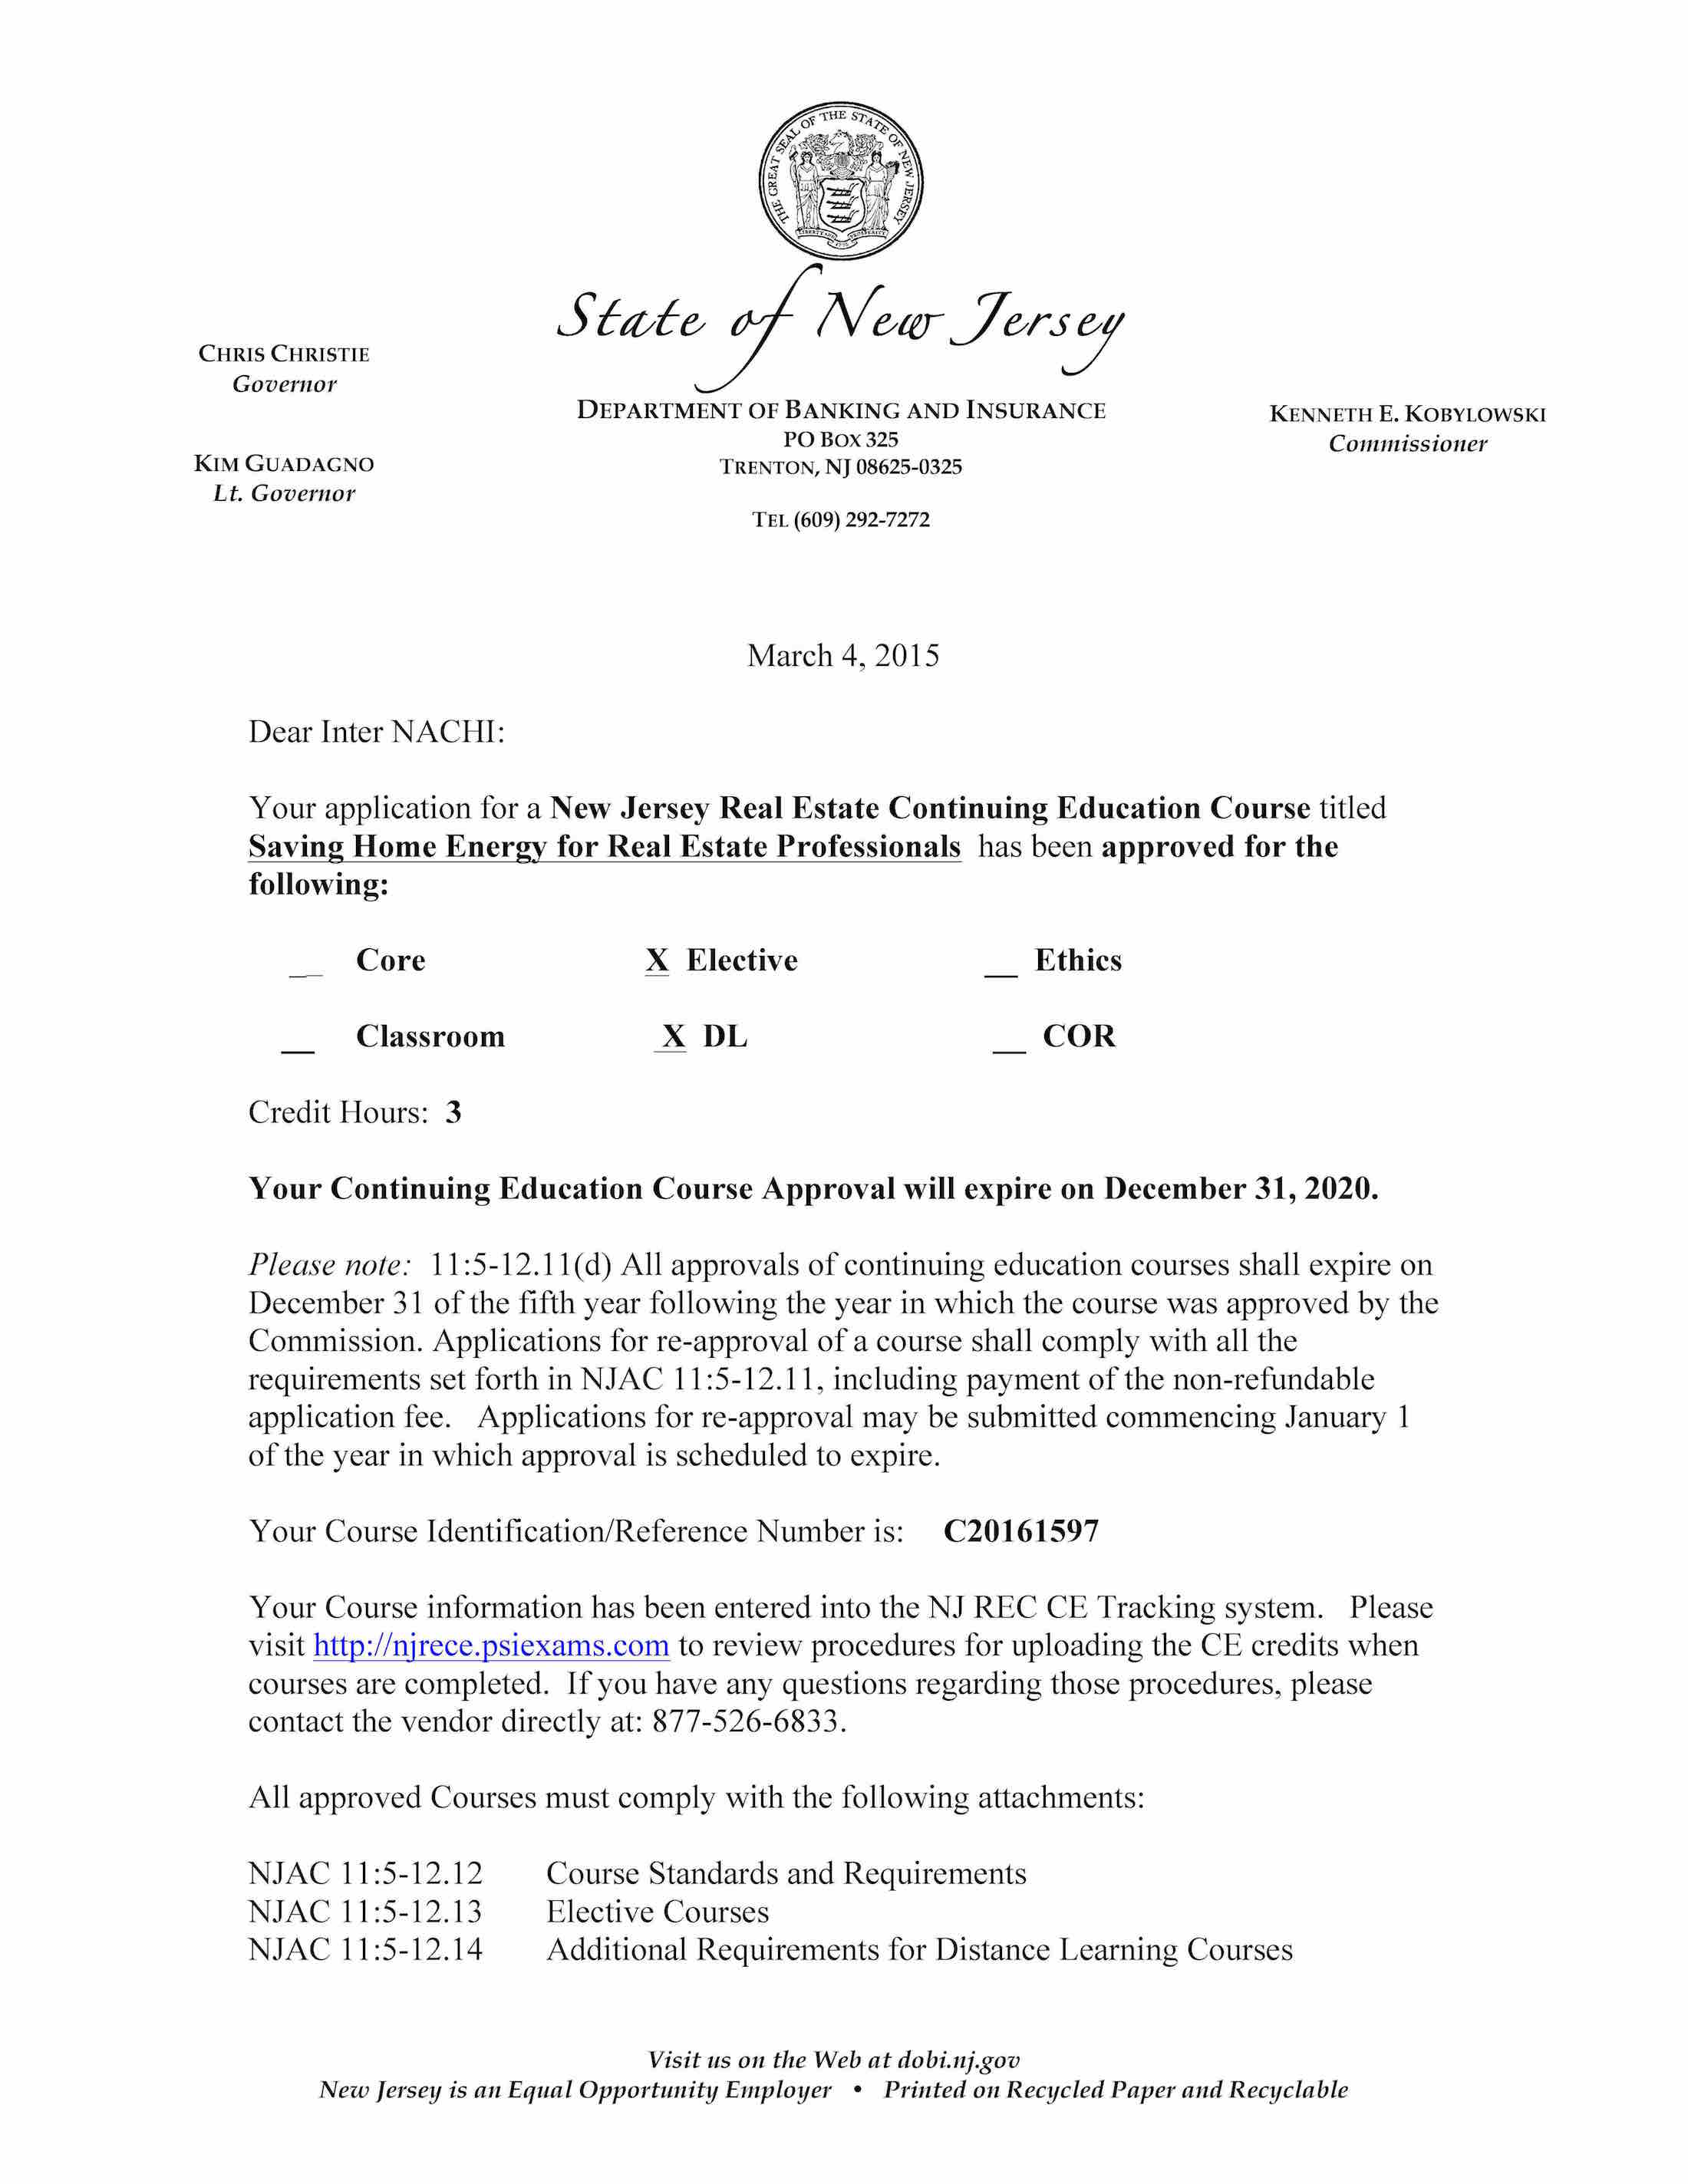 Archived New Jersey Real Estate Approvals - Internachi